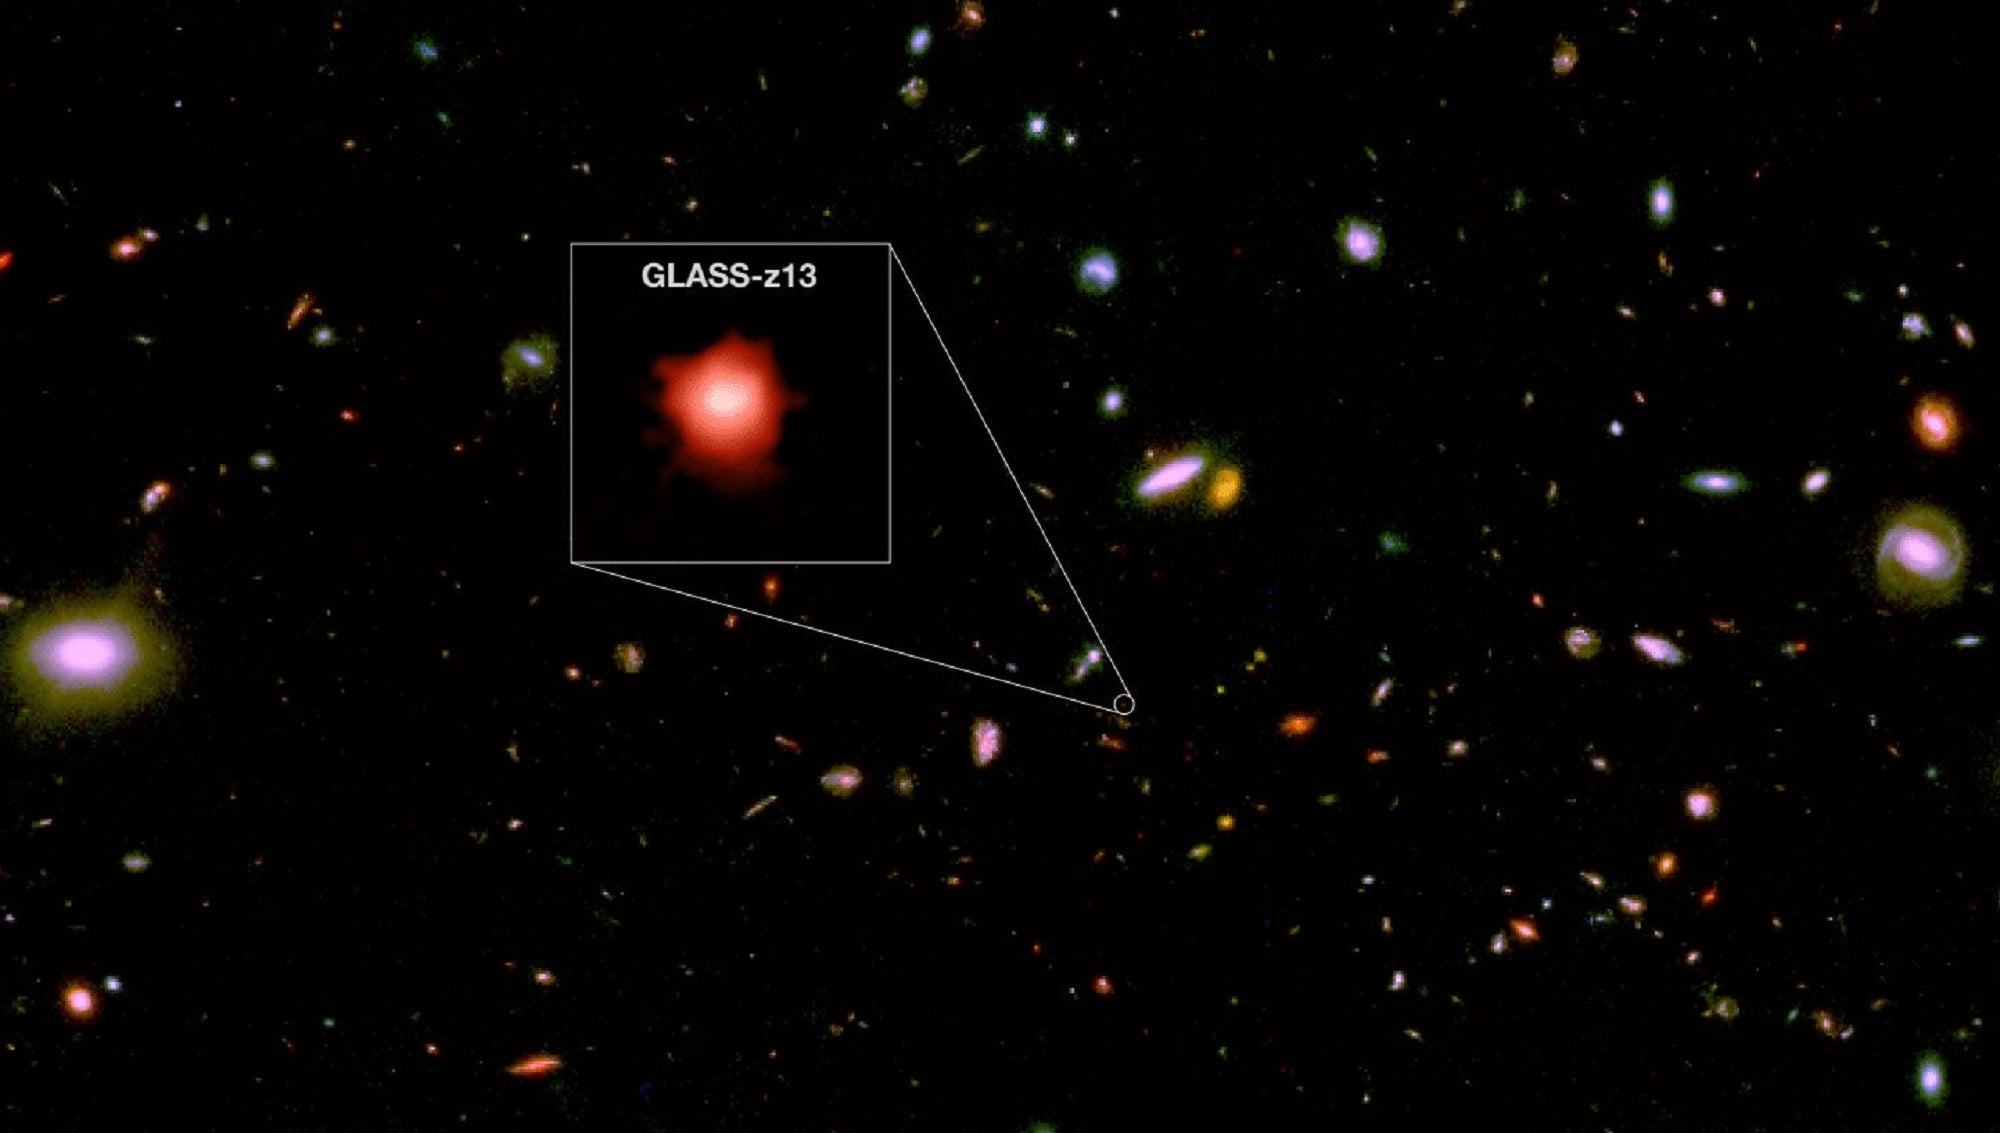 james-webb-space-telescope-glass-z13-galaxy-image.jpg